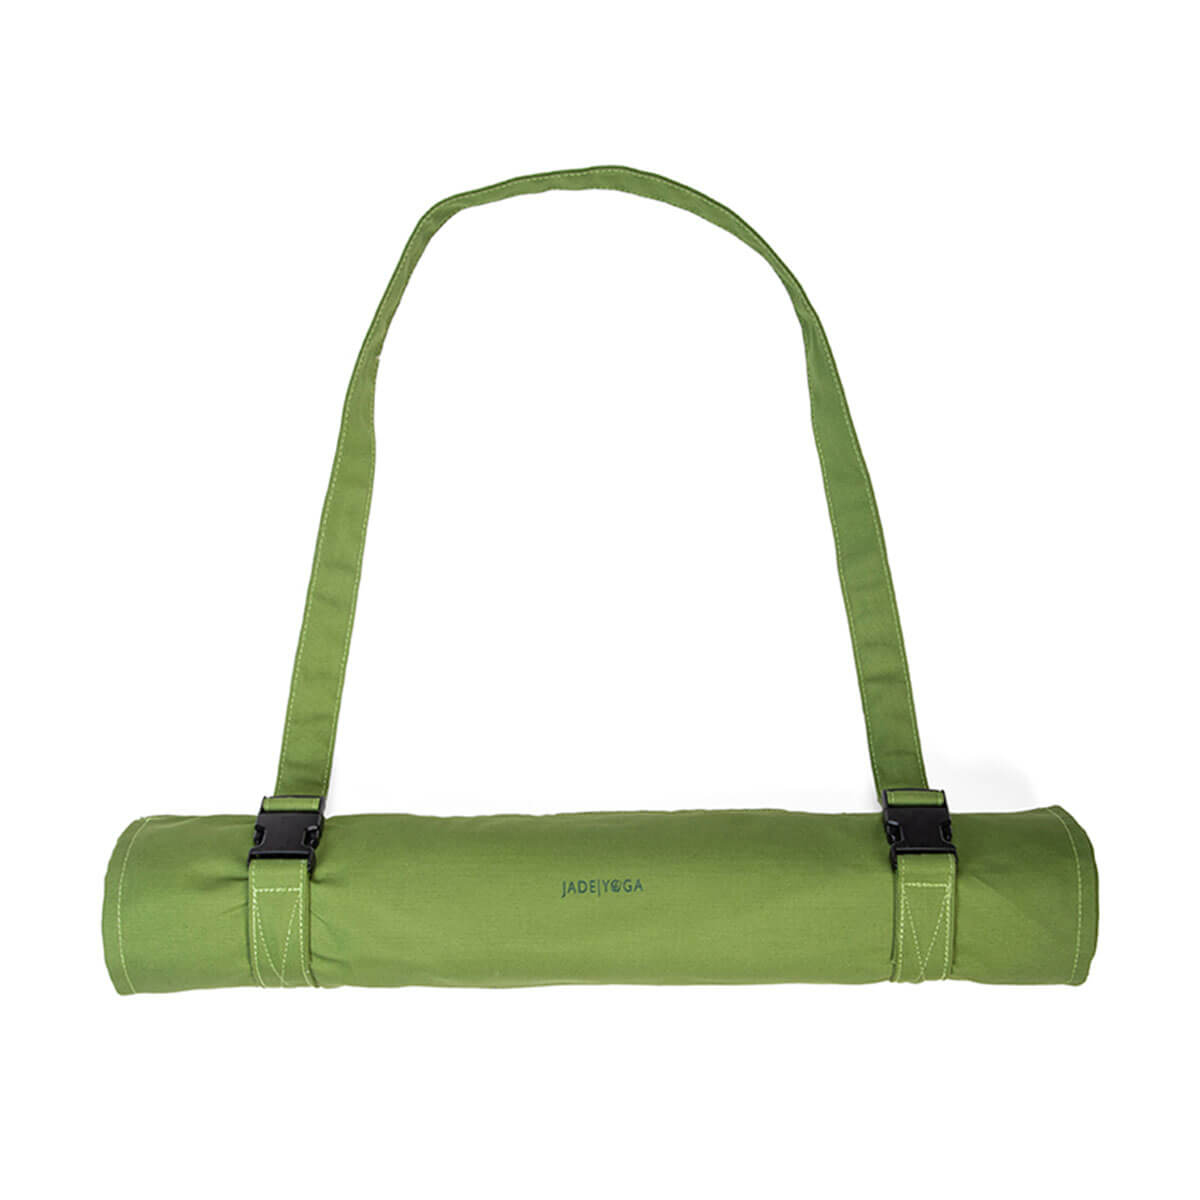 PACEARTH Yoga Mat Bag, 40 x15 Large Size Yoga Mat Carrier, Yoga Mat  Holder, Yoga Bag